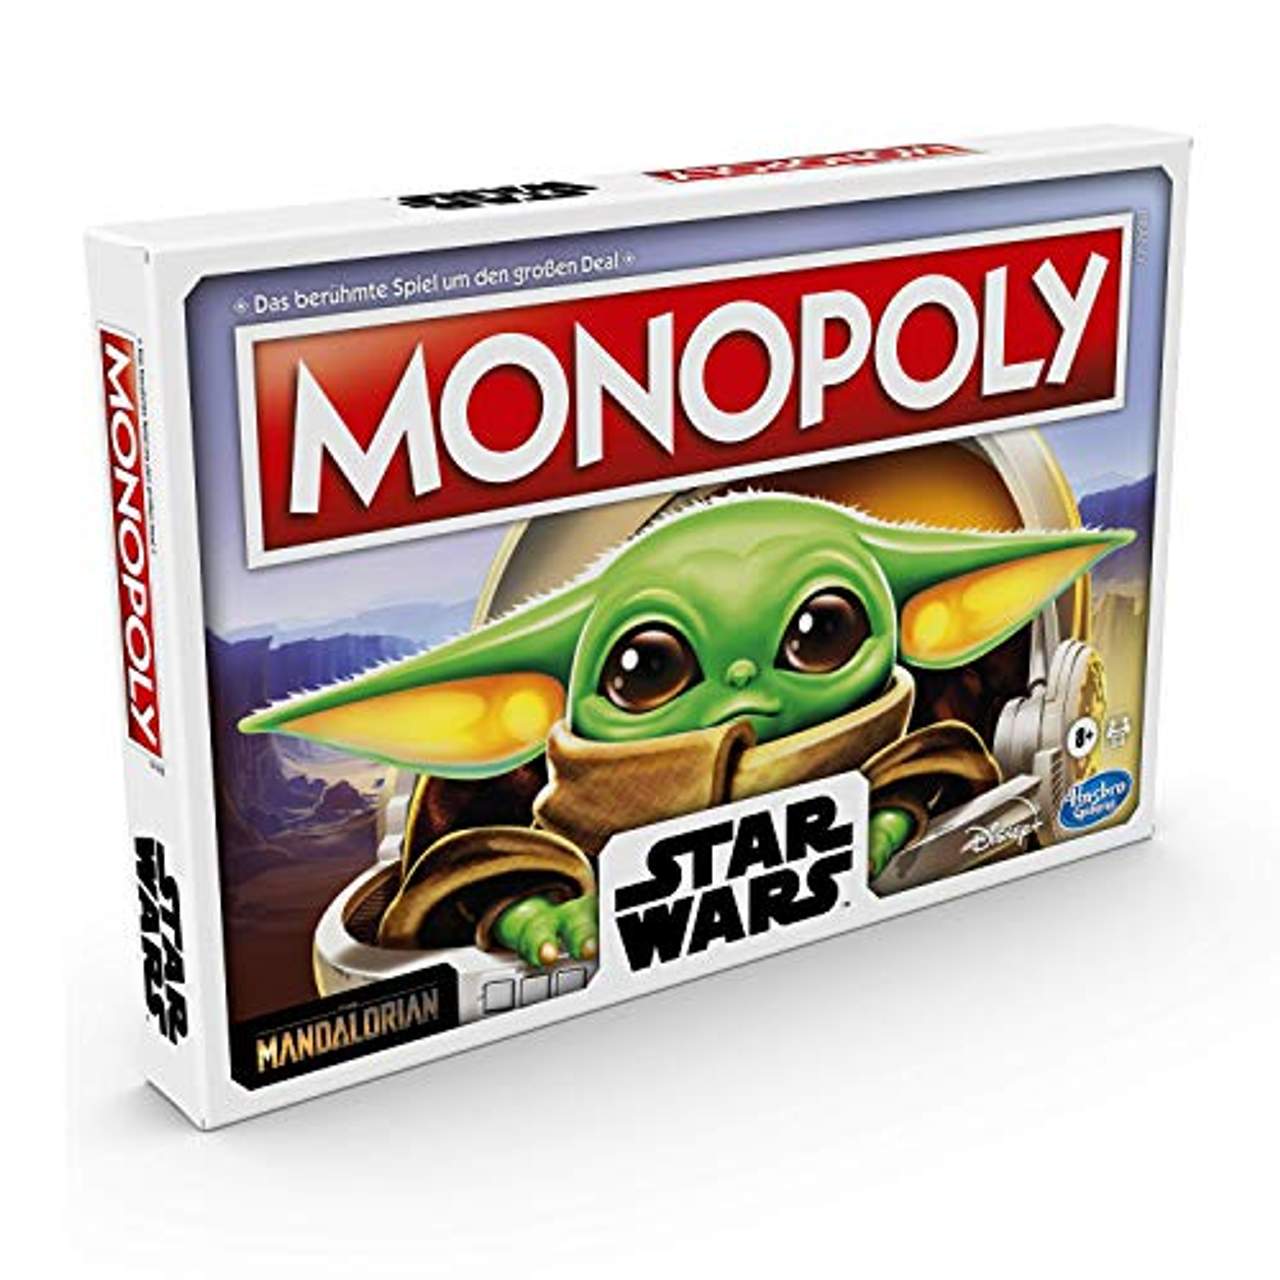 Monopoly: Star Wars Das Kind Edition